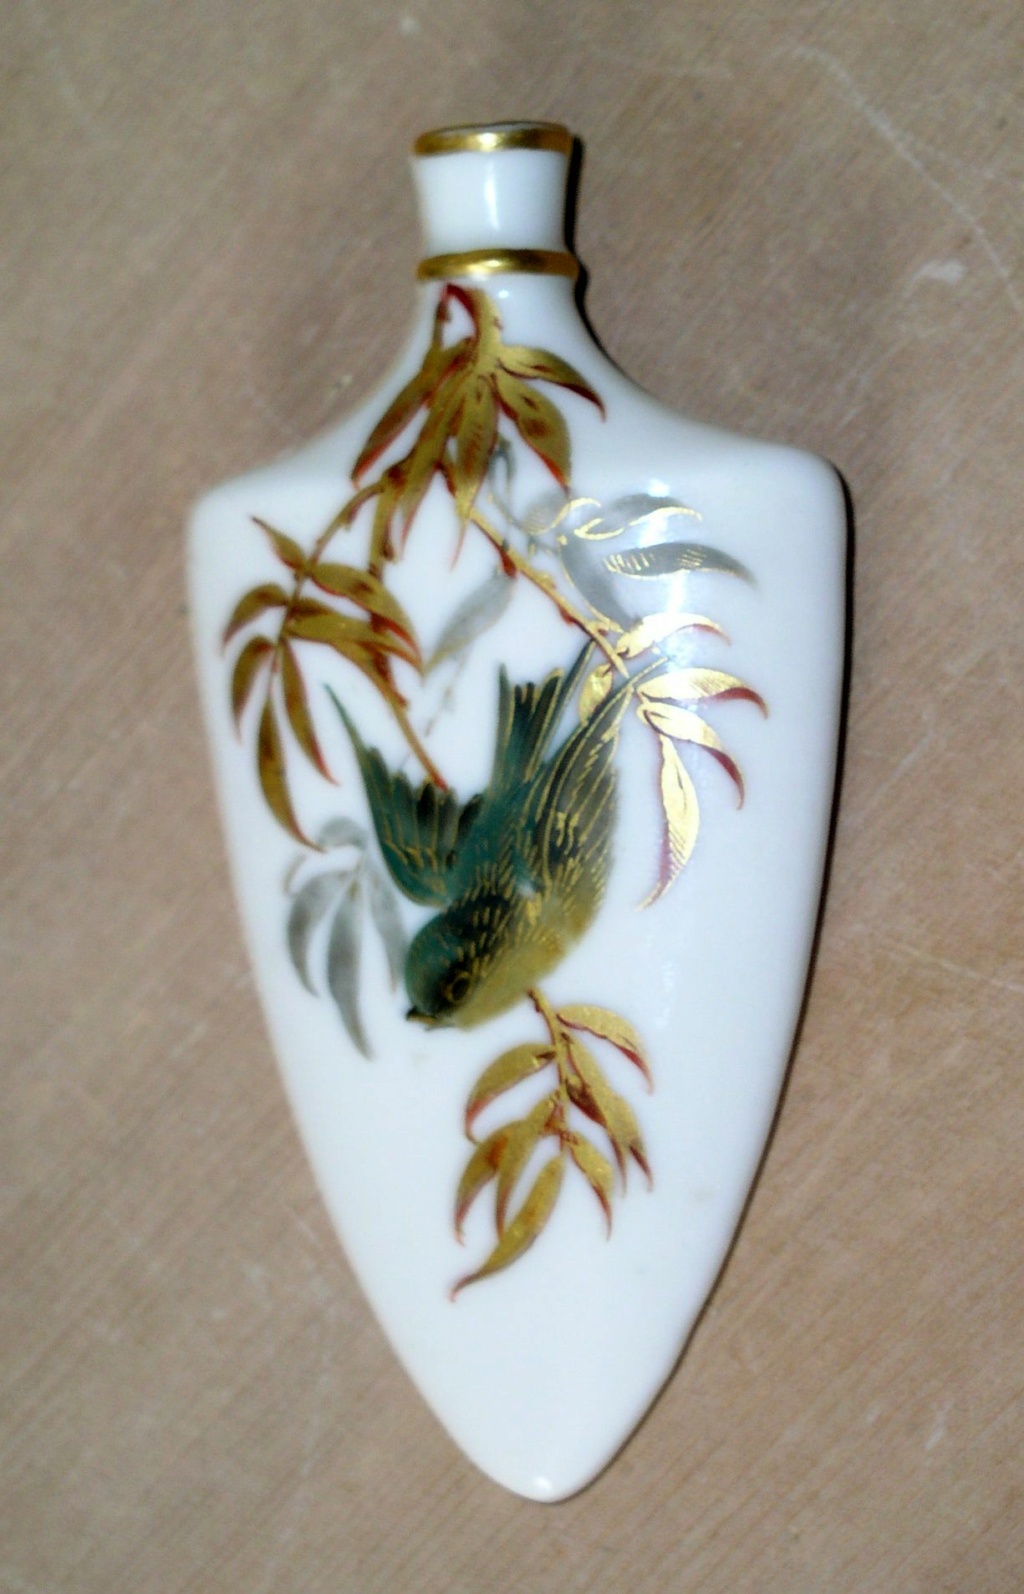 Worcester Porcelain Perfume bottle with bird decoration. P1010172